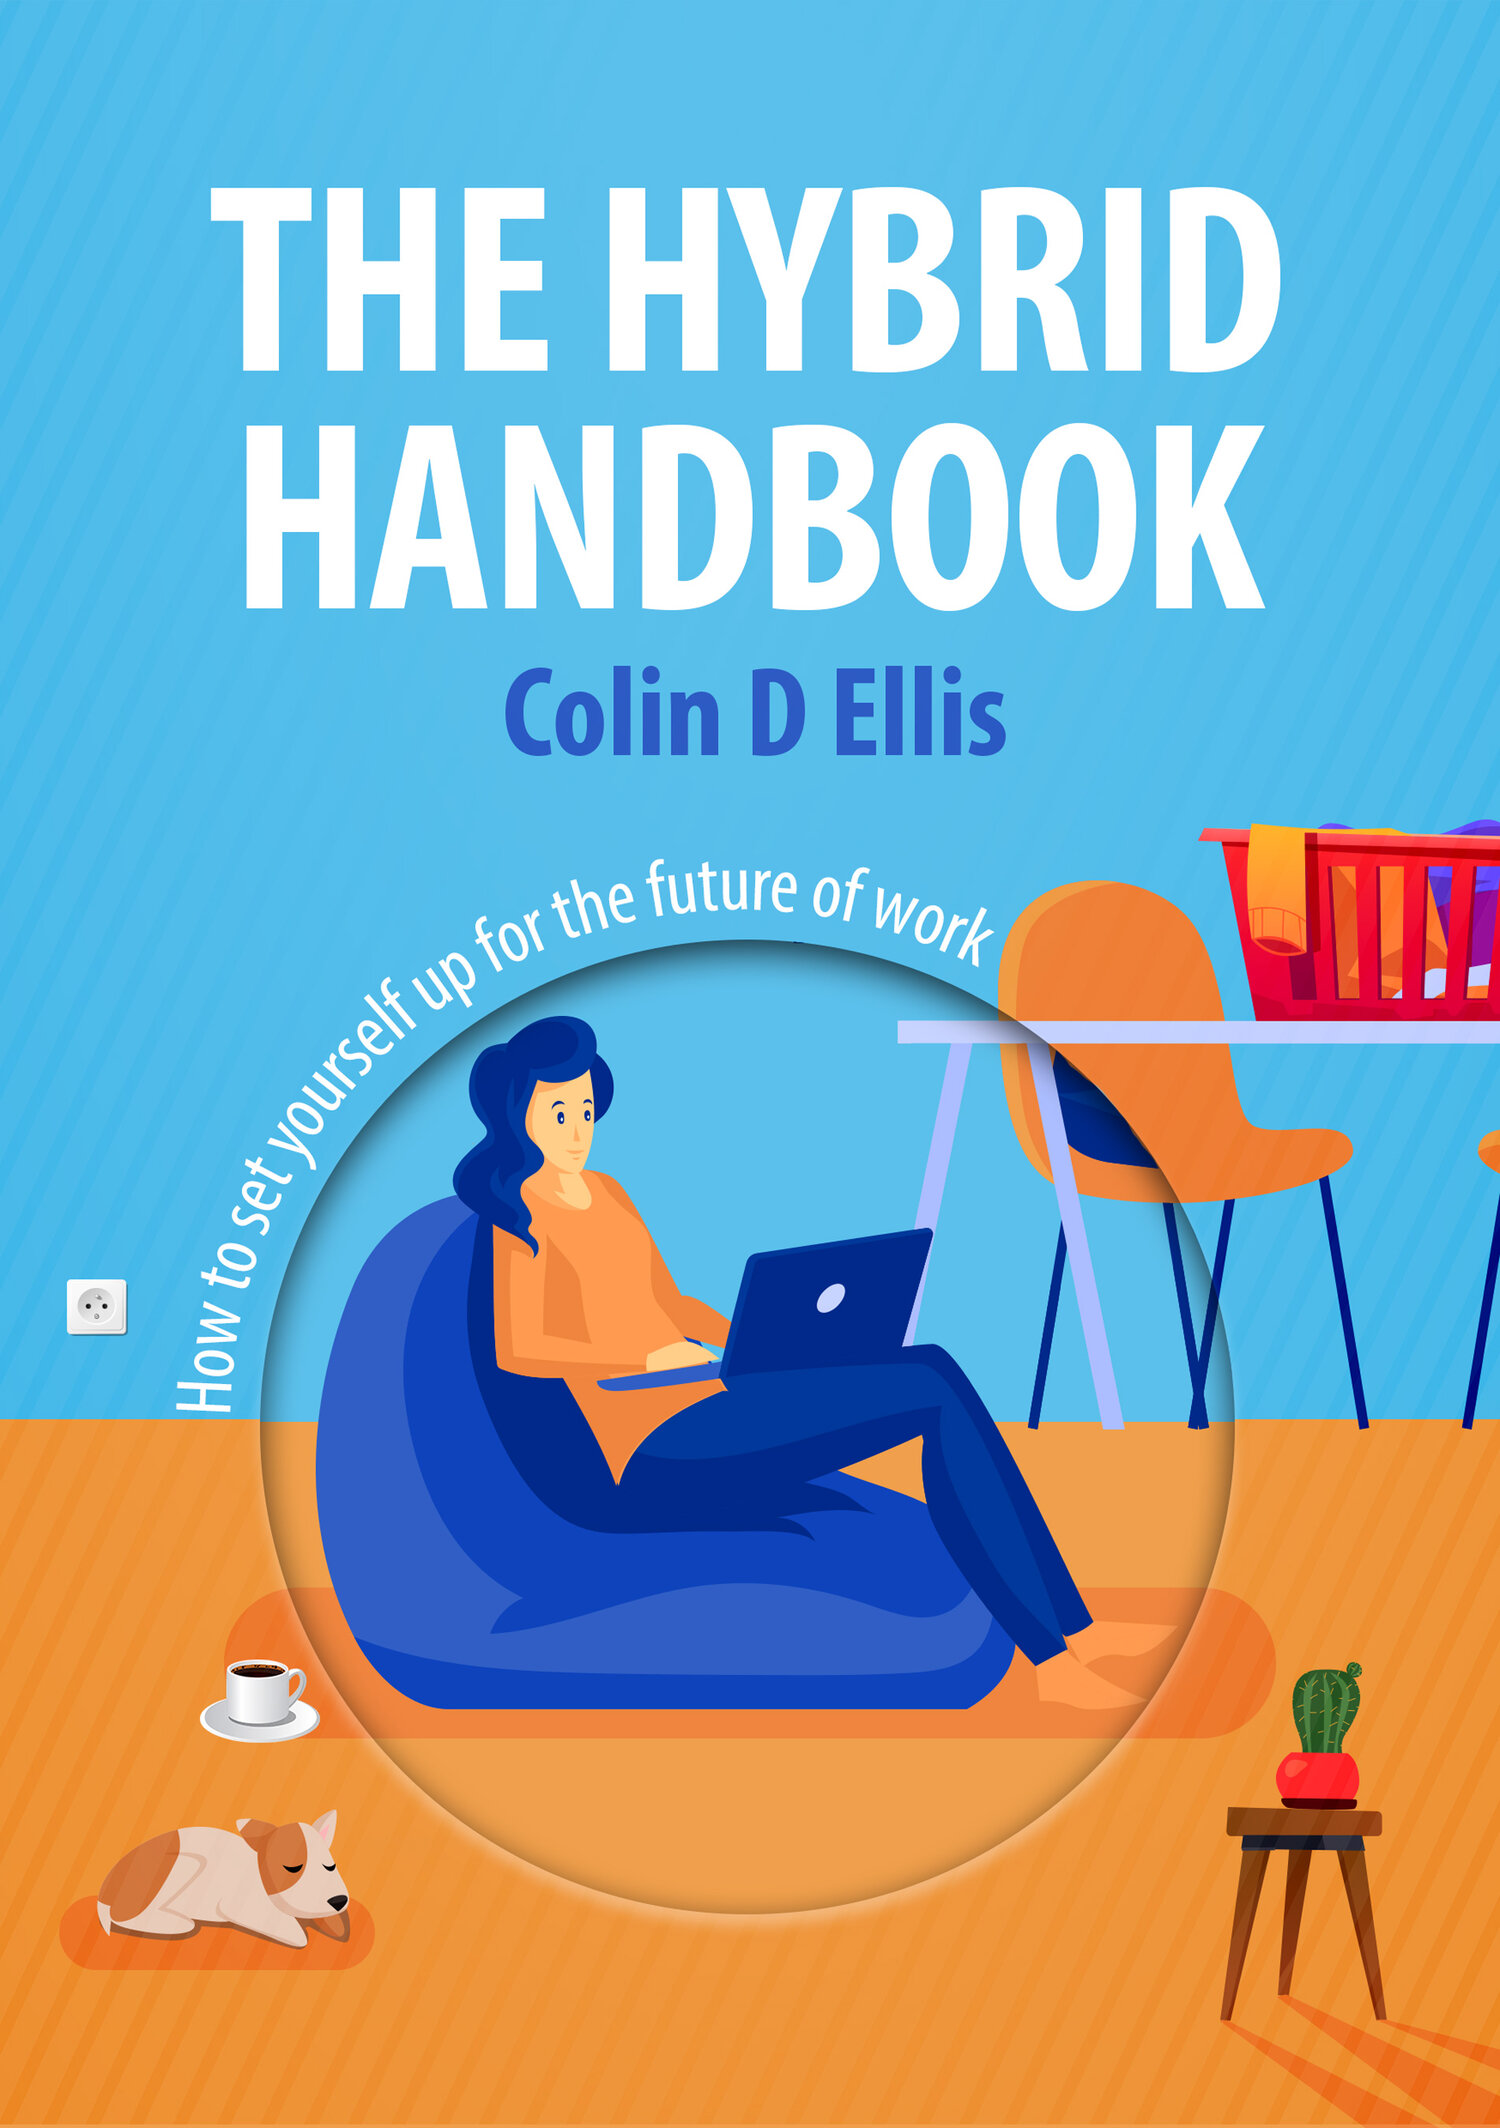 Colin D Ellis – The Hybrid Handbook by Colin D Ellis